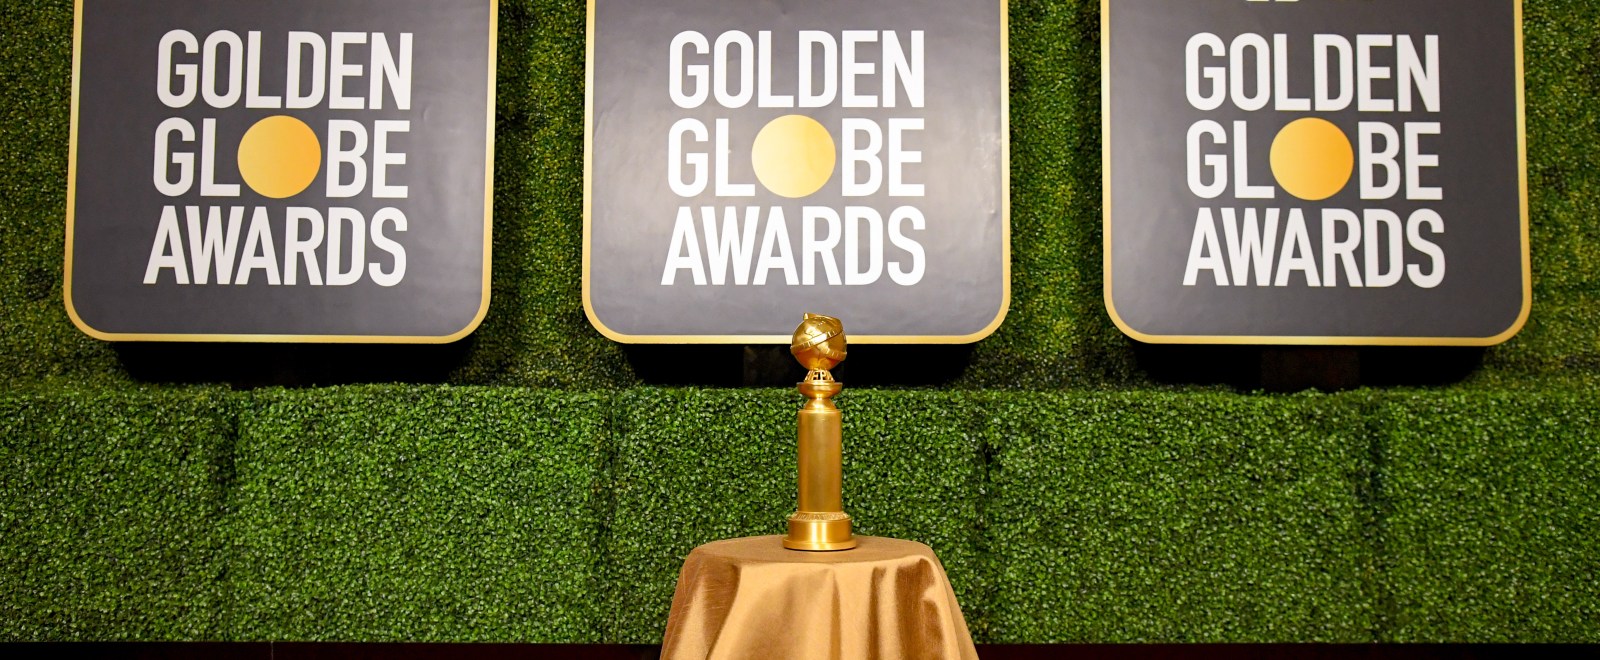 Golden-Globes-GettyImages-1304641400.jpg